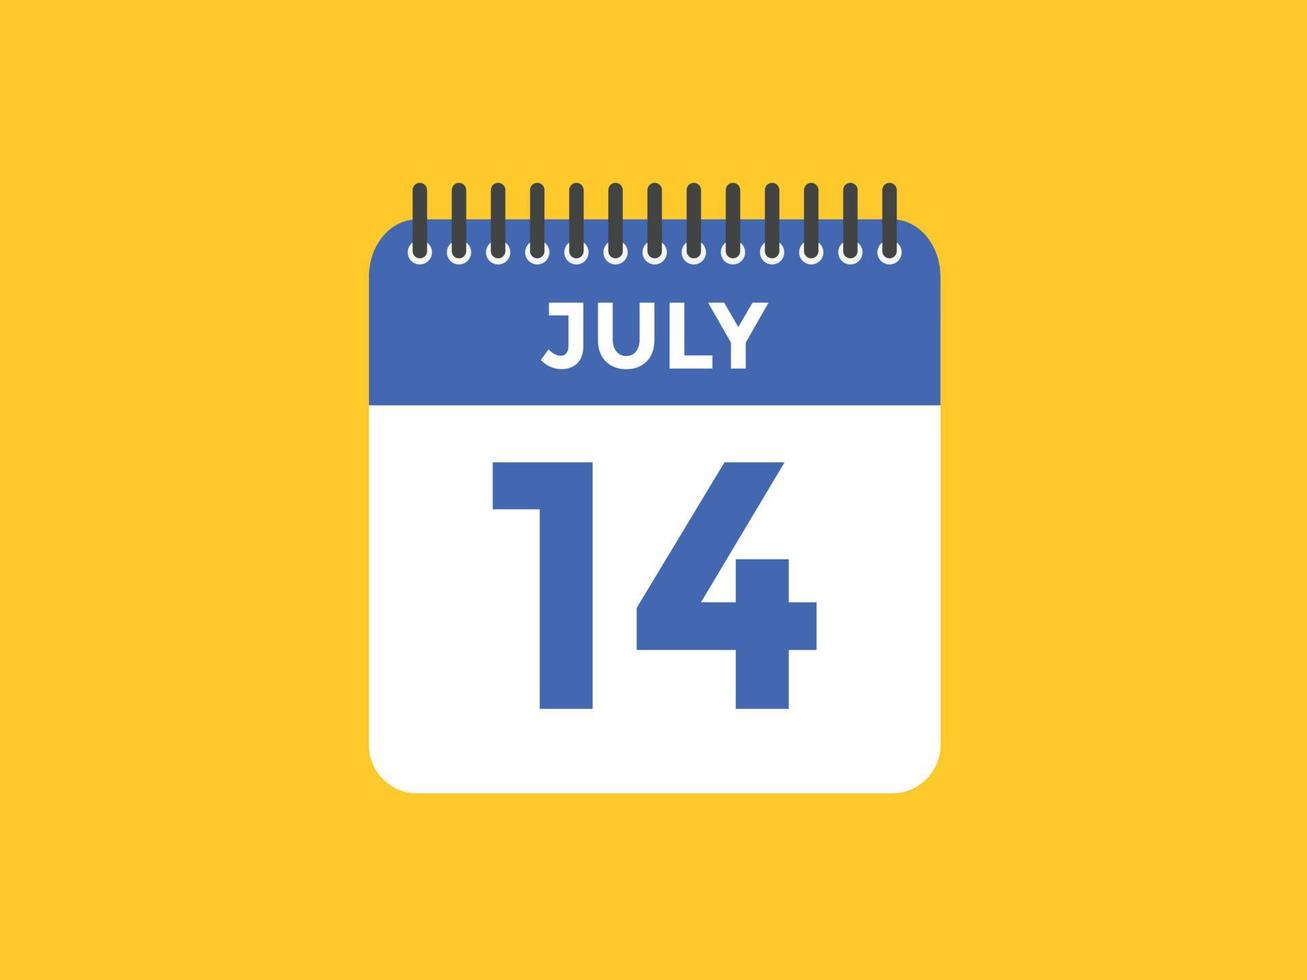 july 14 calendar reminder. 14th july daily calendar icon template. Calendar 14th july icon Design template. Vector illustration